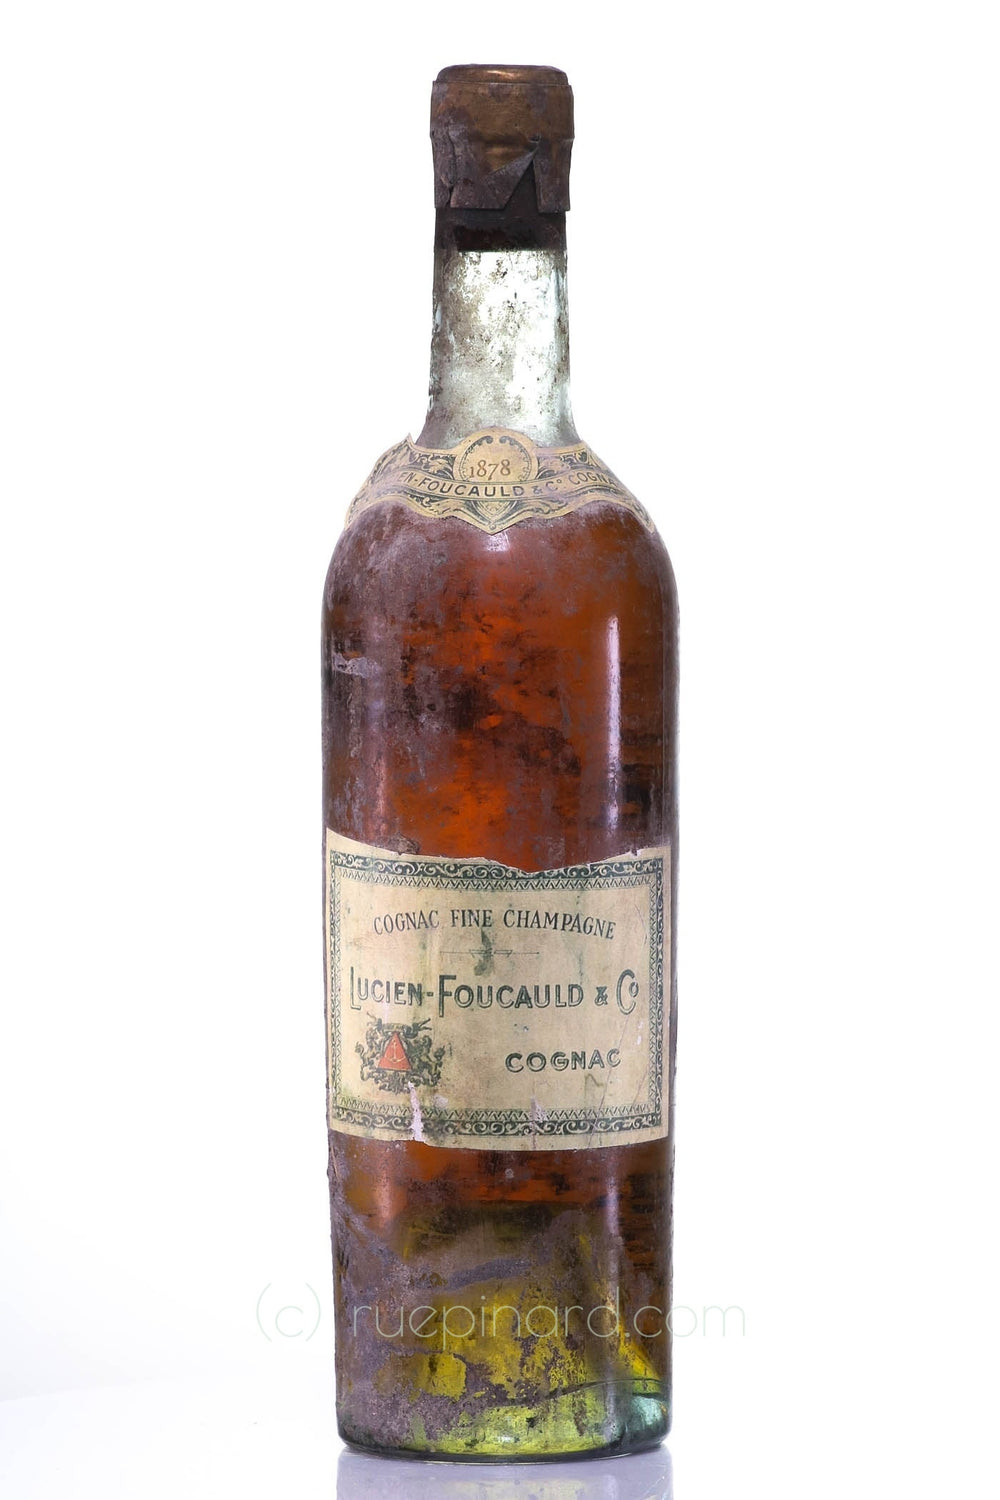 Lucien Foucauld & Co. 1878 Fine Champagne Cognac - Rue Pinard